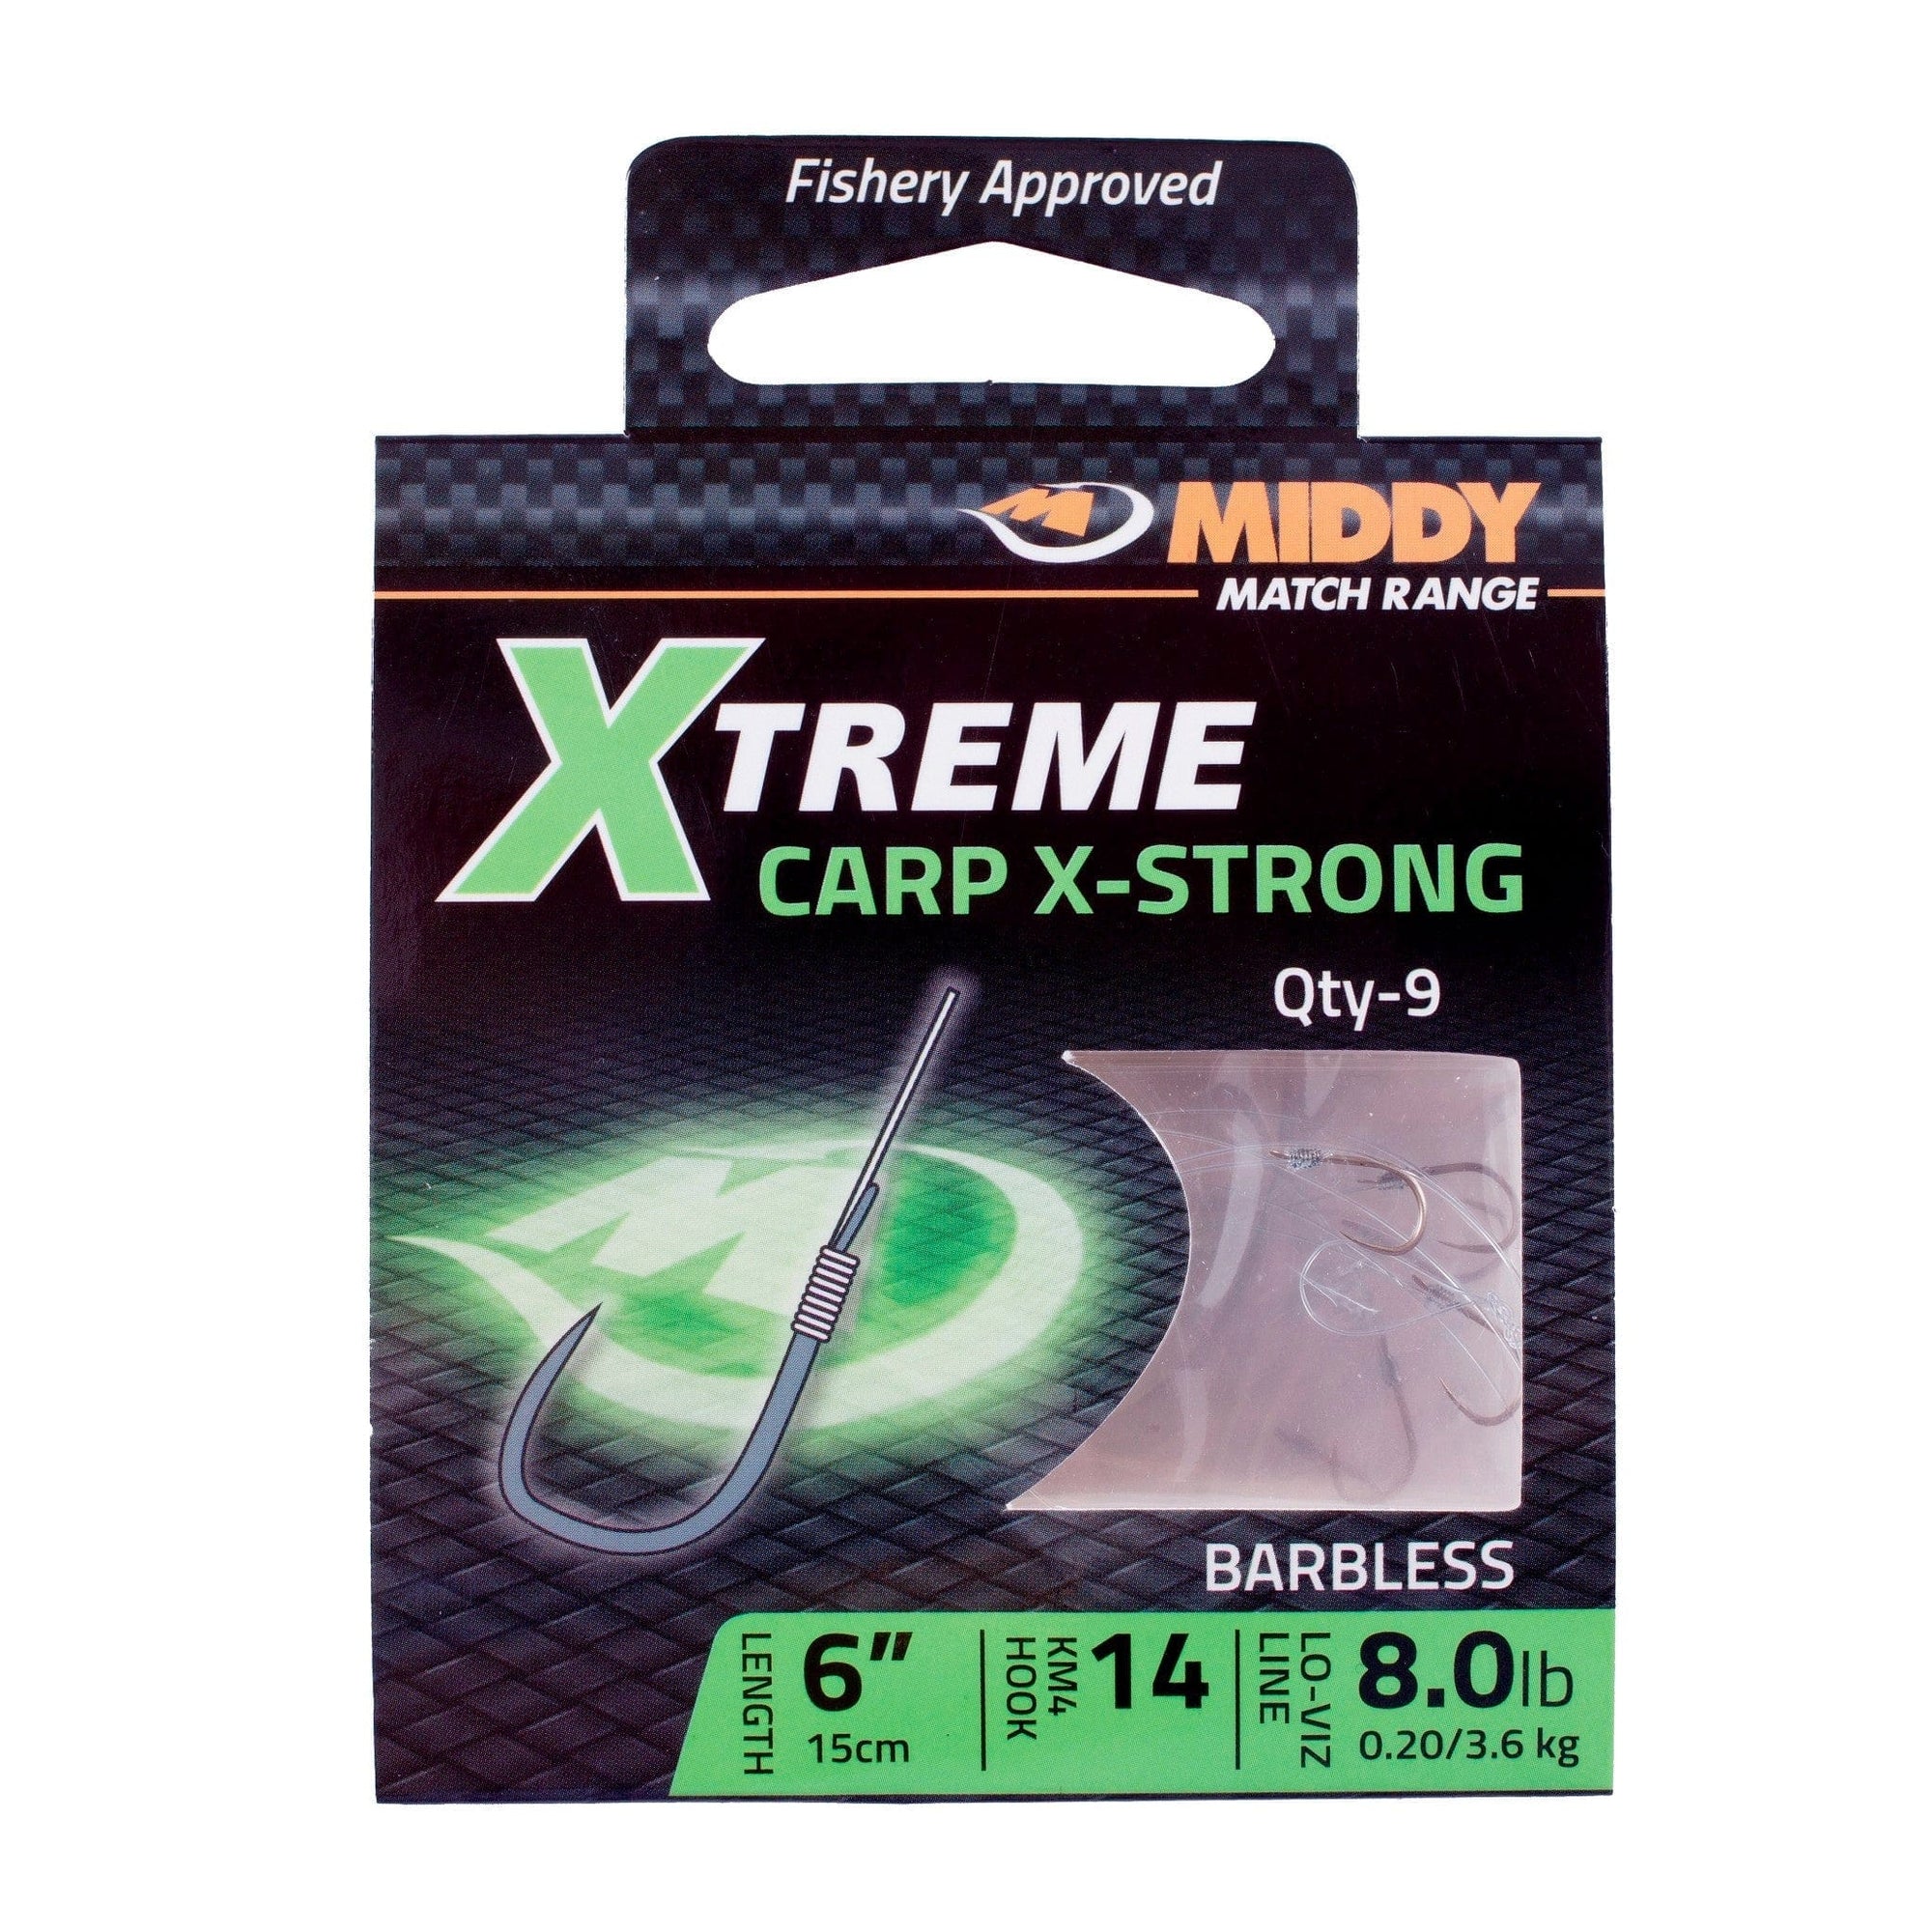 MIDDY Xtreme Carp X-Strong Hooks-to-Nylon (9pc pkt).